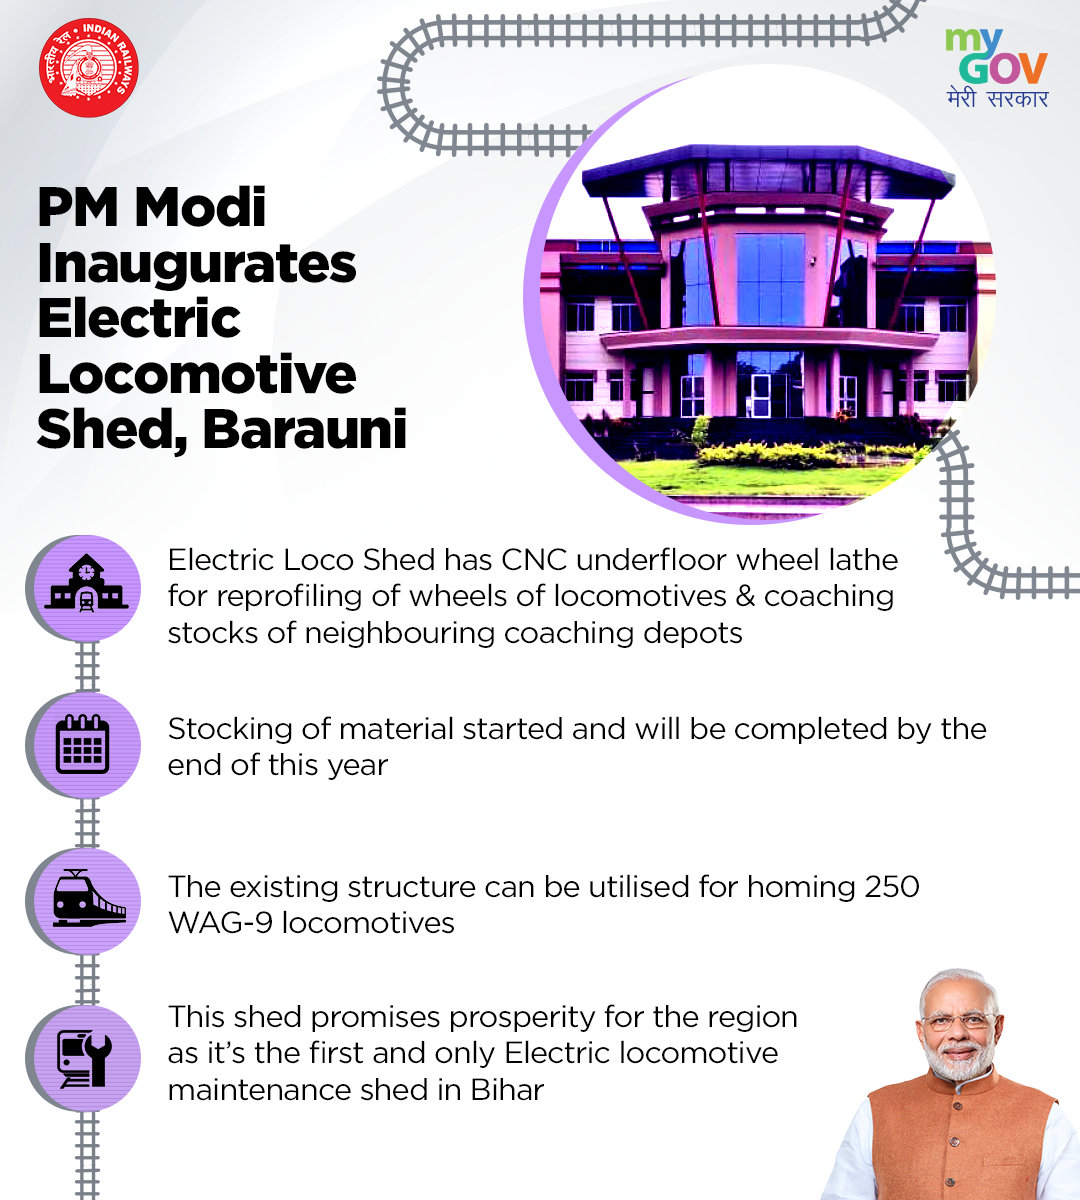 PM Modi Inaugurates Electric Locomotive Shed, Barauni #AatmaNirbharBihar #BiharKaPragatiPath